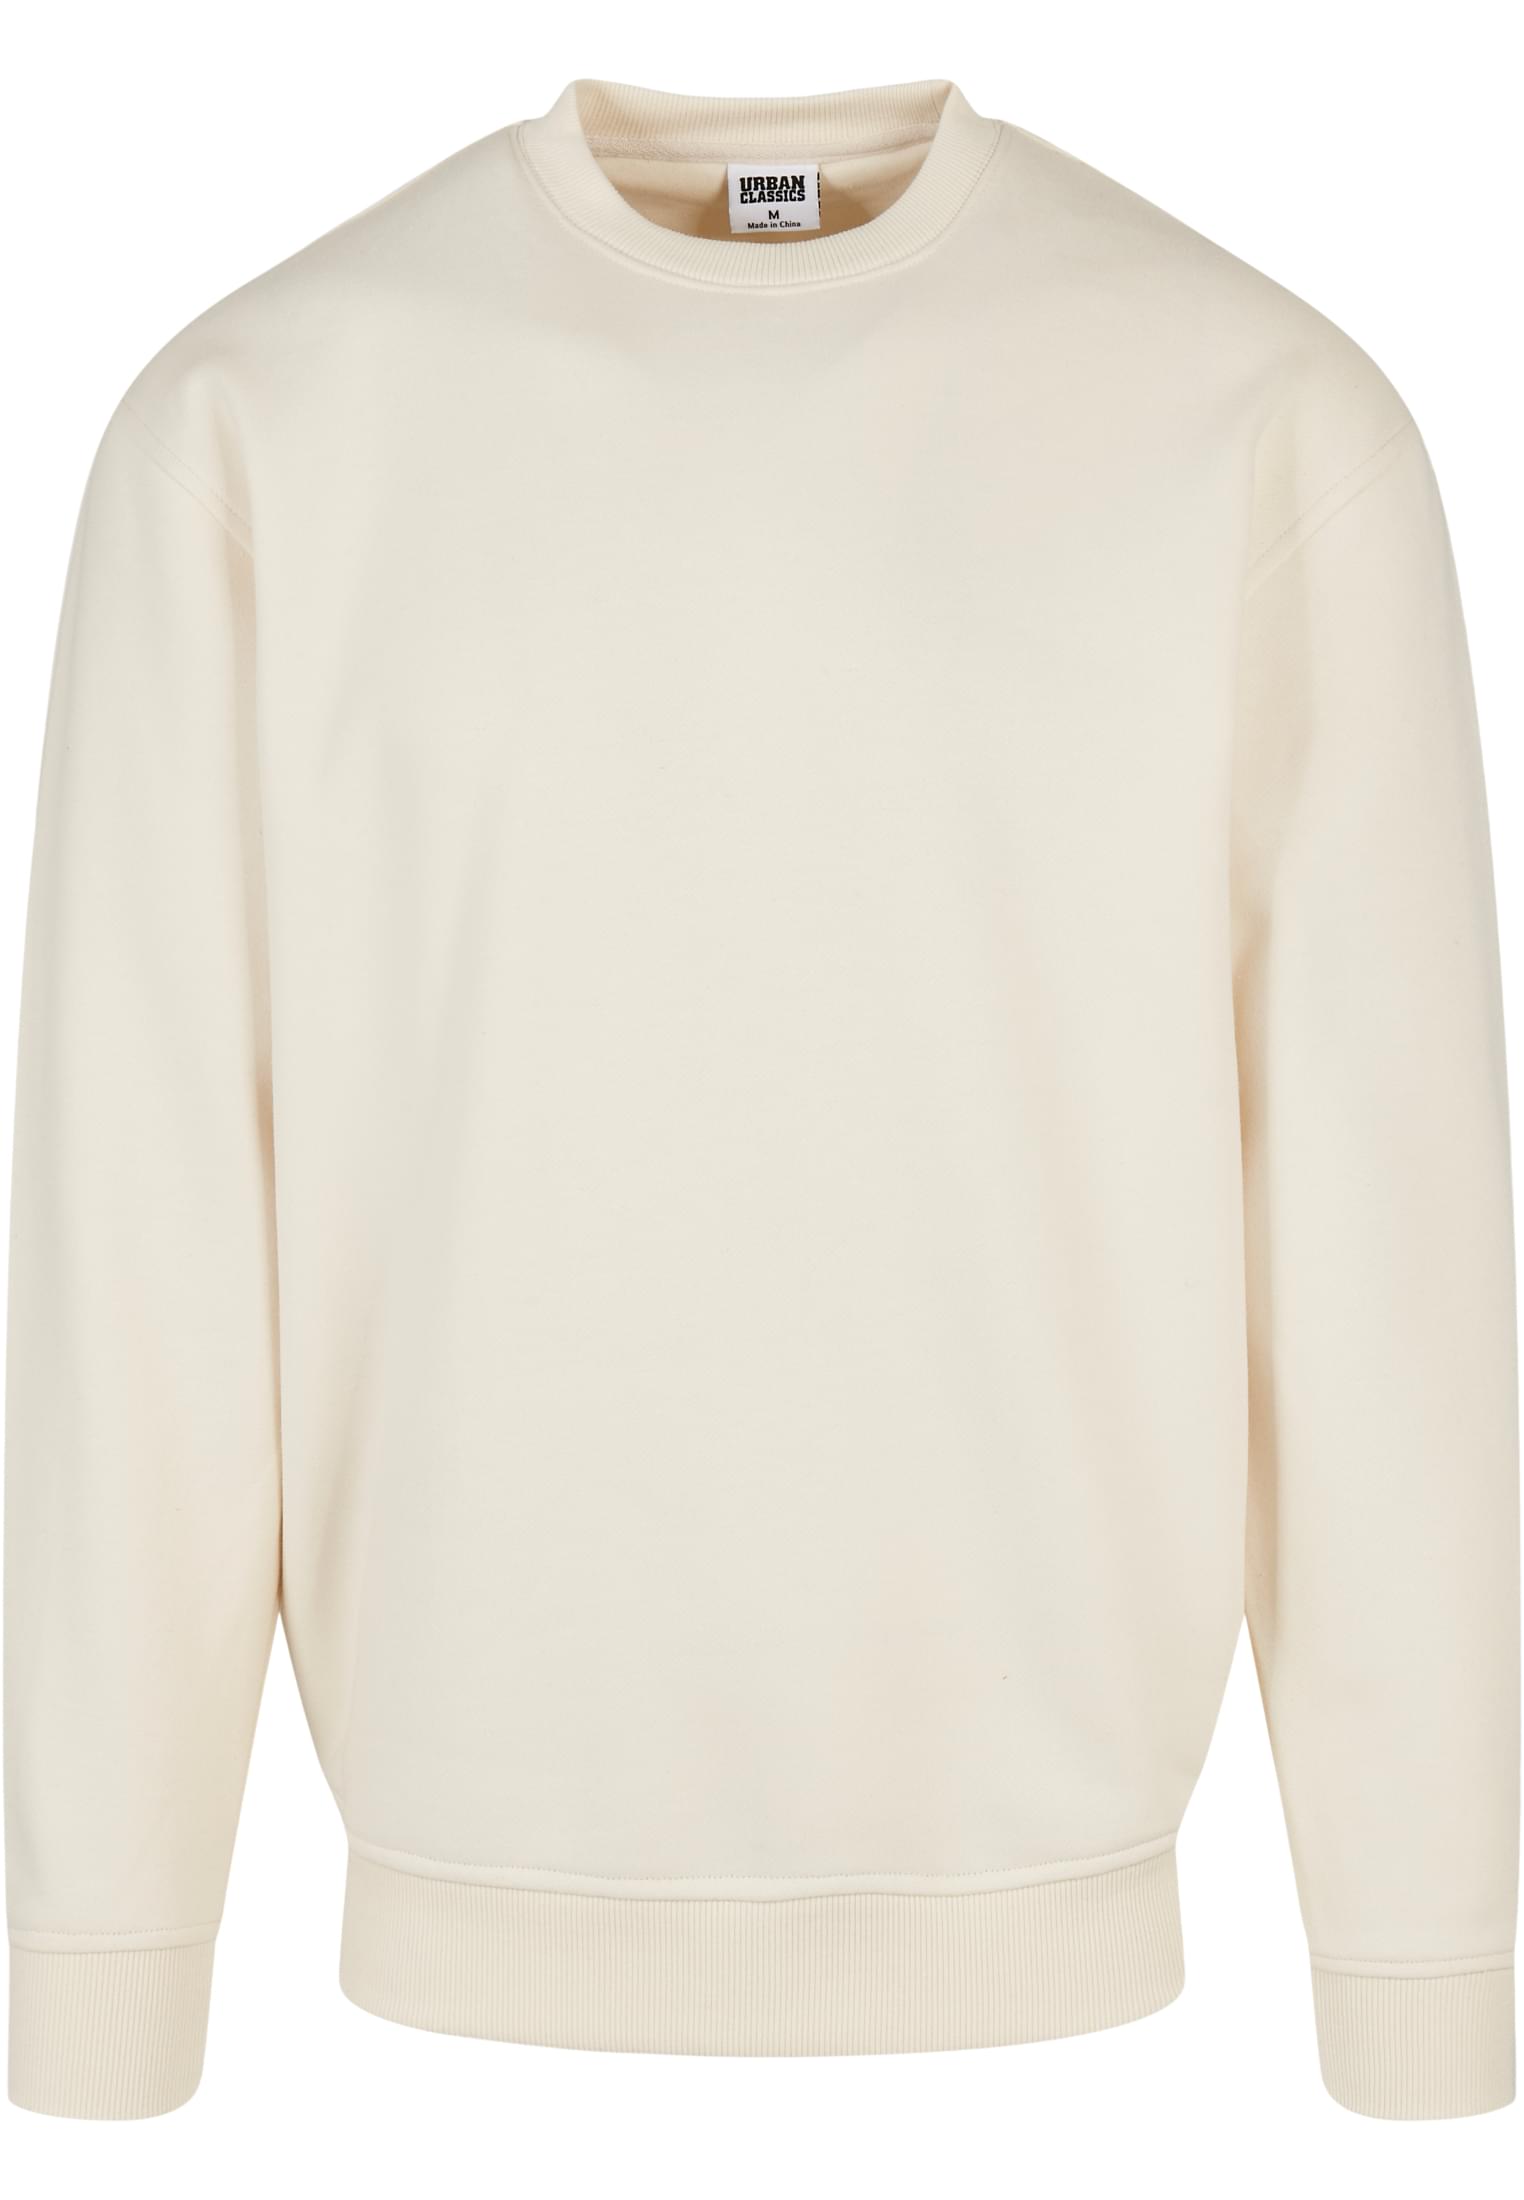 Crewnecks Crewneck Sweatshirt in Farbe whitesand